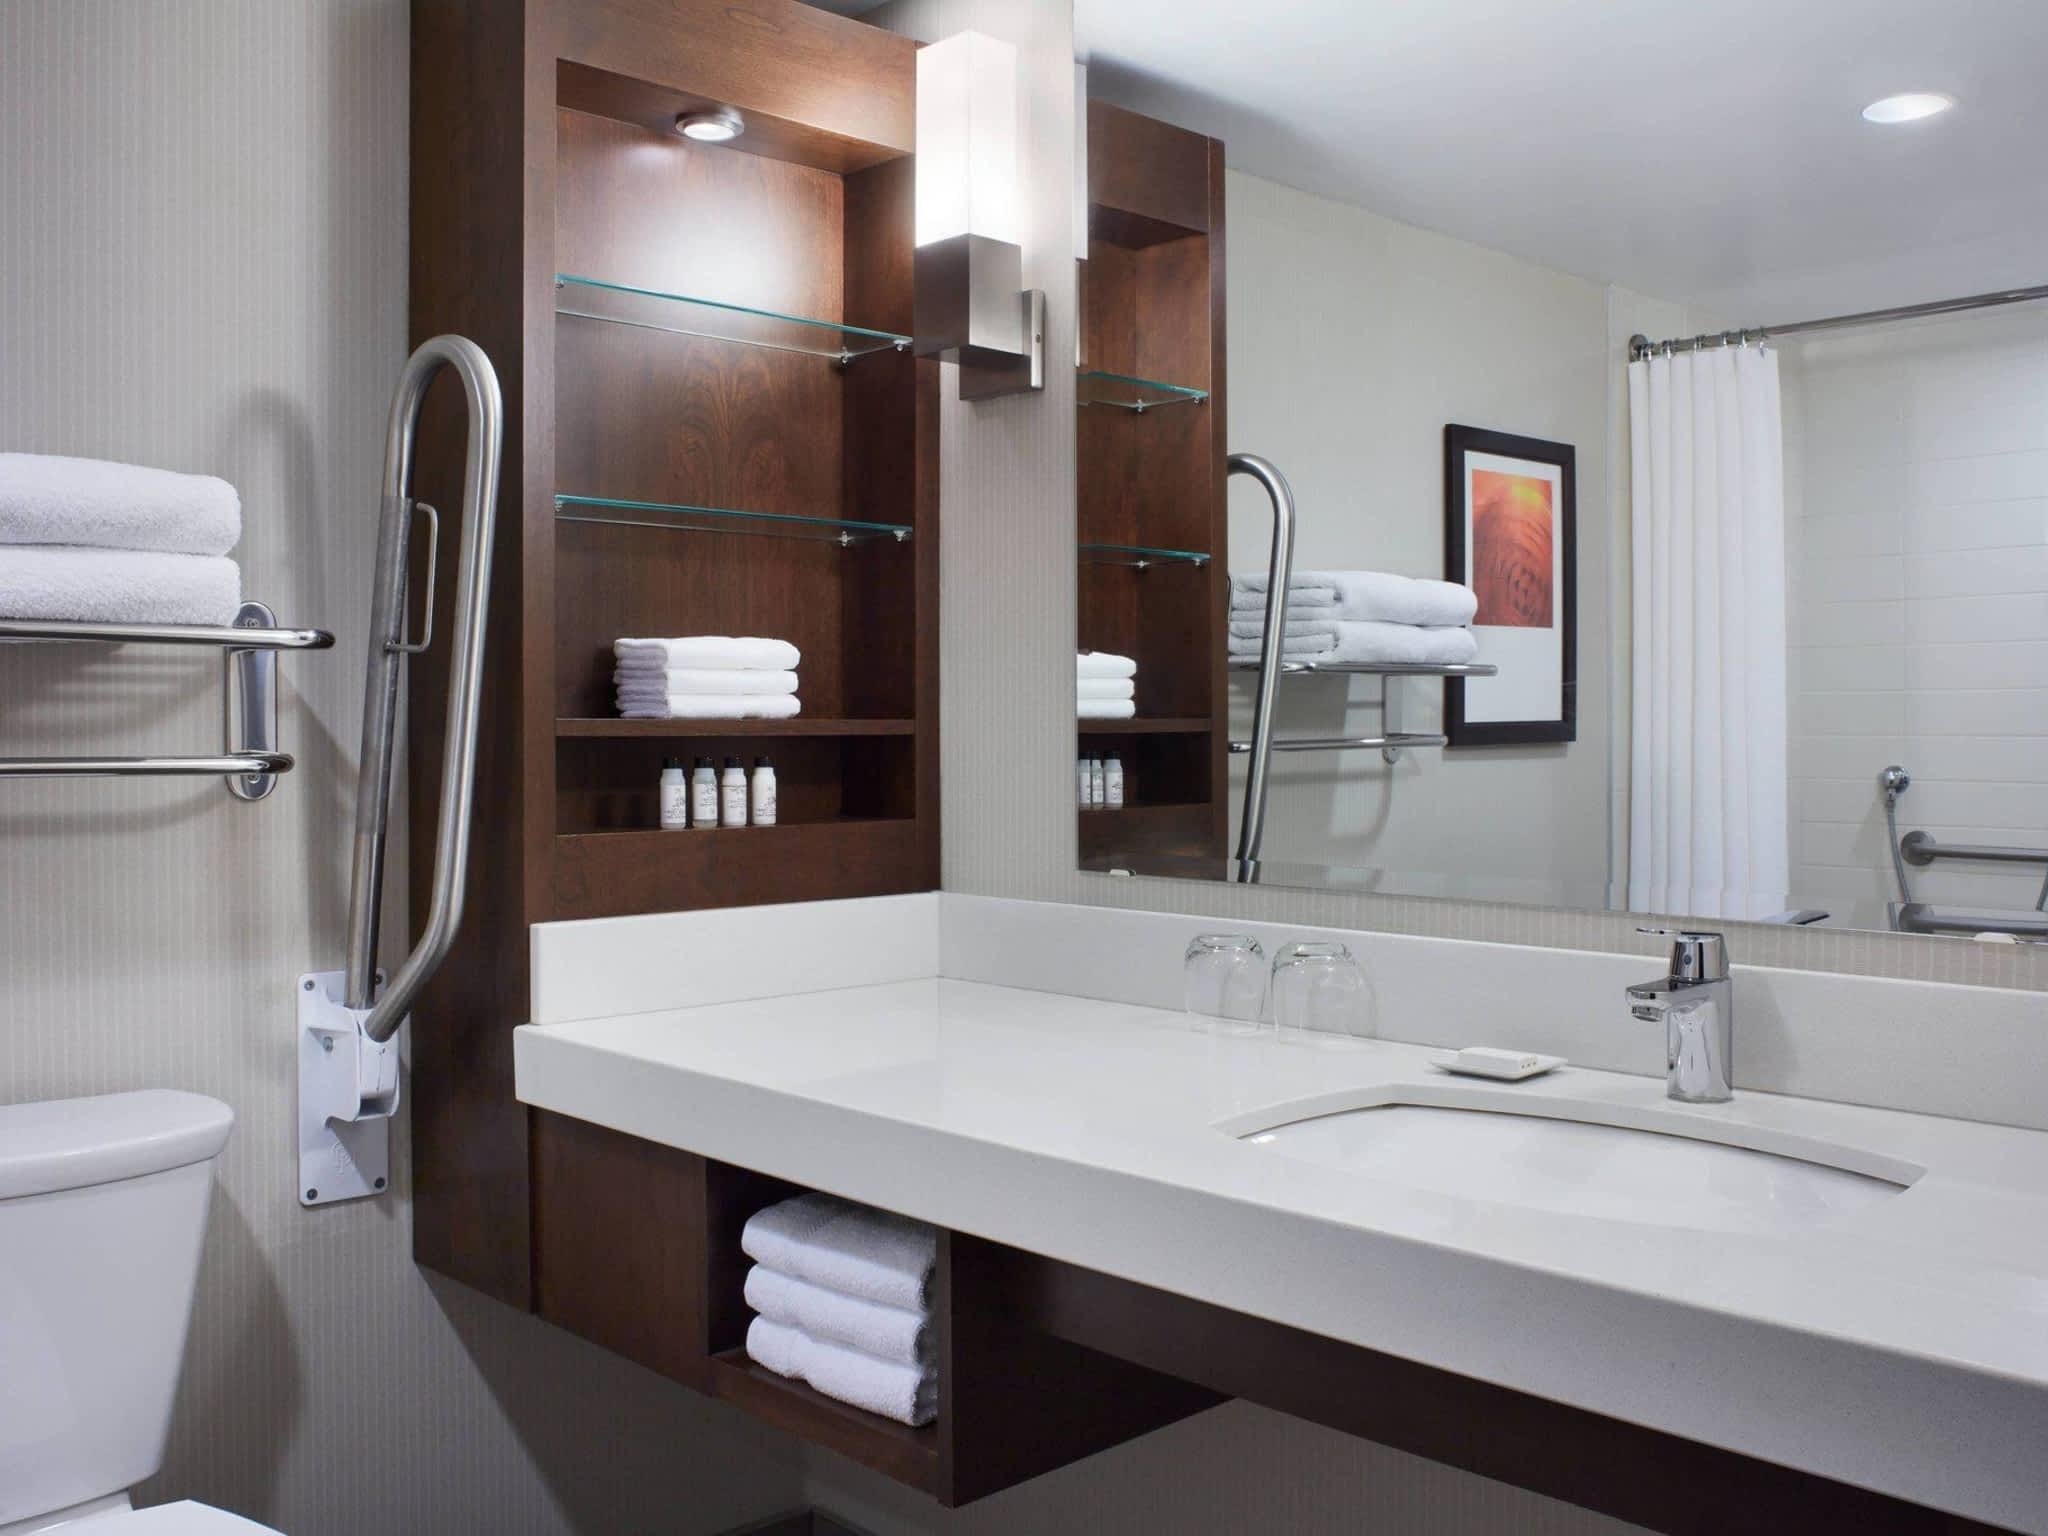 photo Delta Hotels by Marriott Fredericton